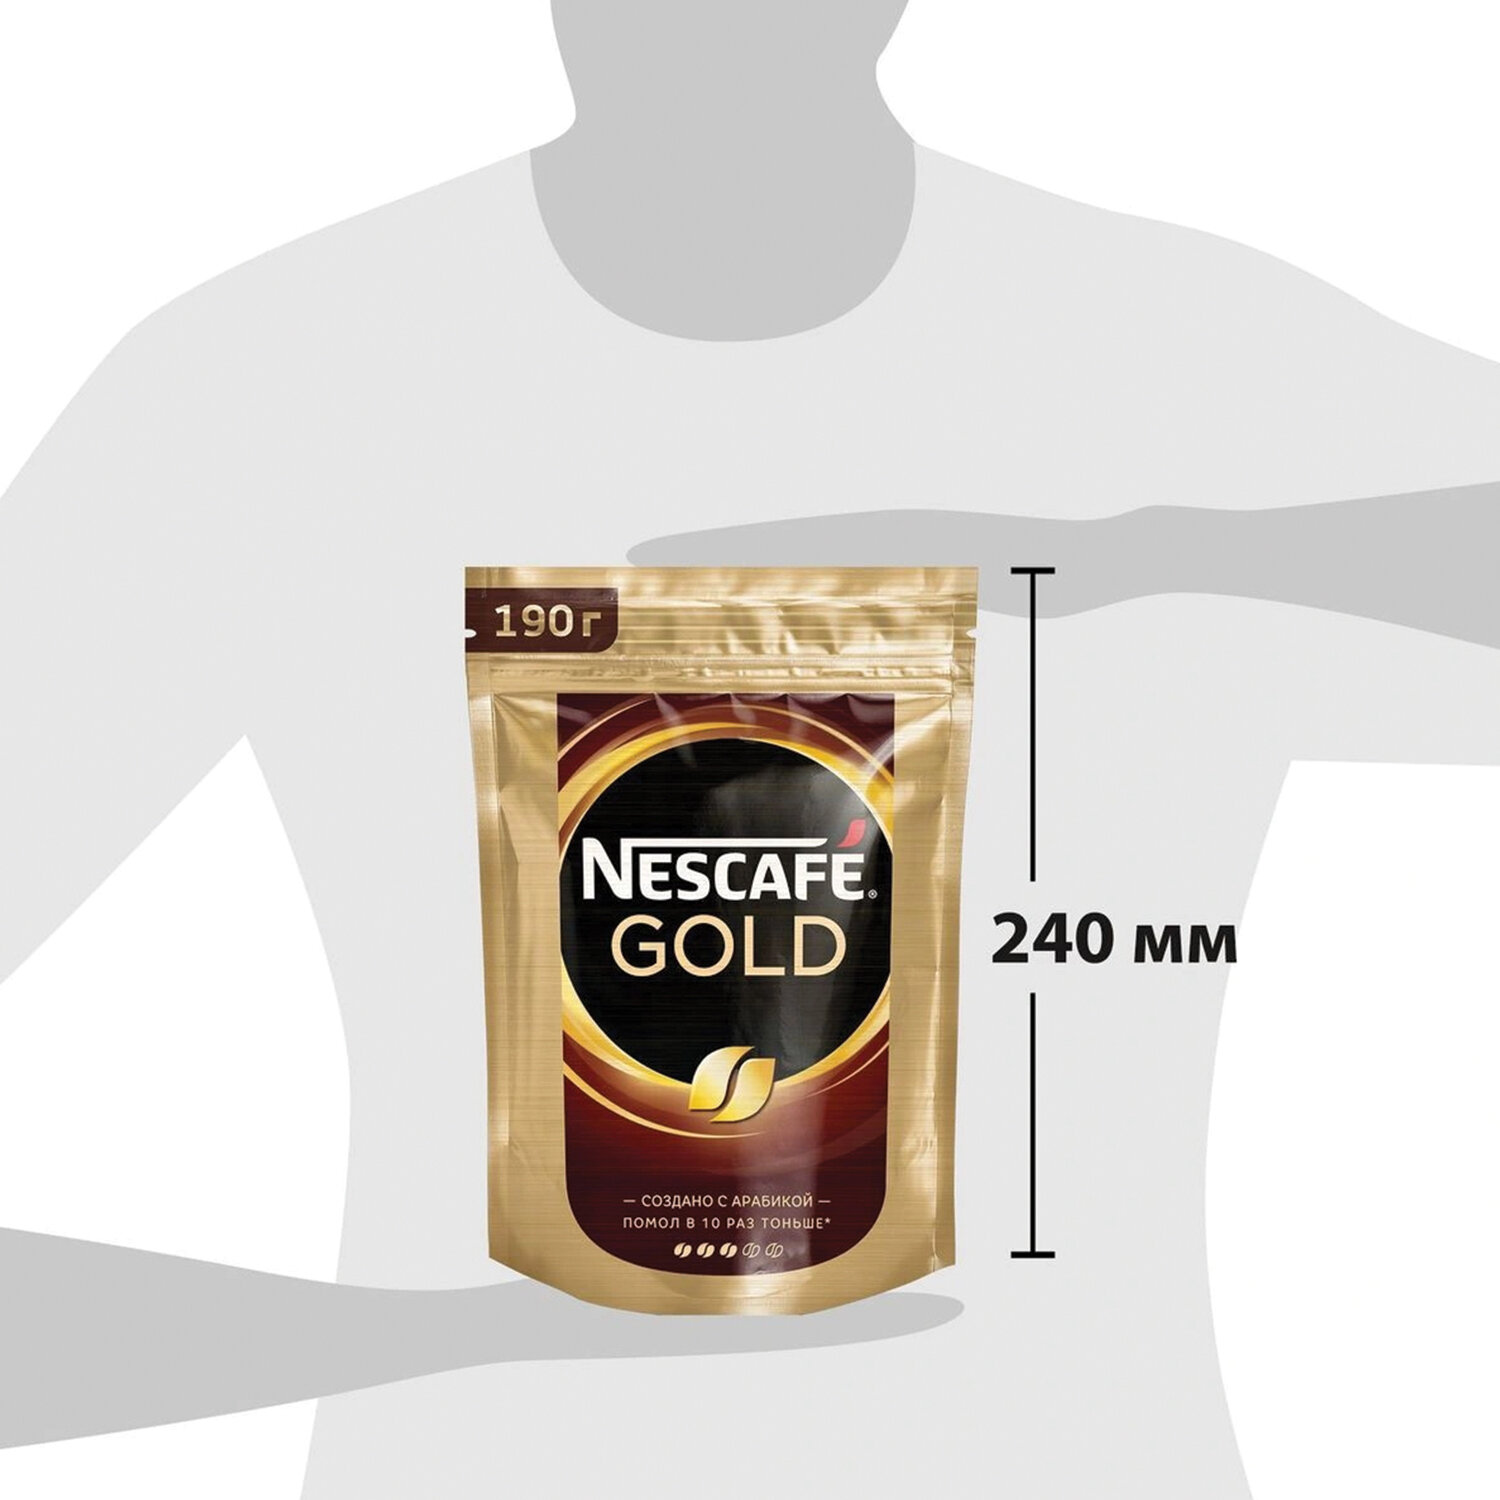 Nescafe gold 190 г. Кофе Nescafe Gold растворимый 500 г. Нескафе Голд 500 гр. м/у. Нескафе Голд 320 г. Кофе Nescafe Gold пакет 500 гр.